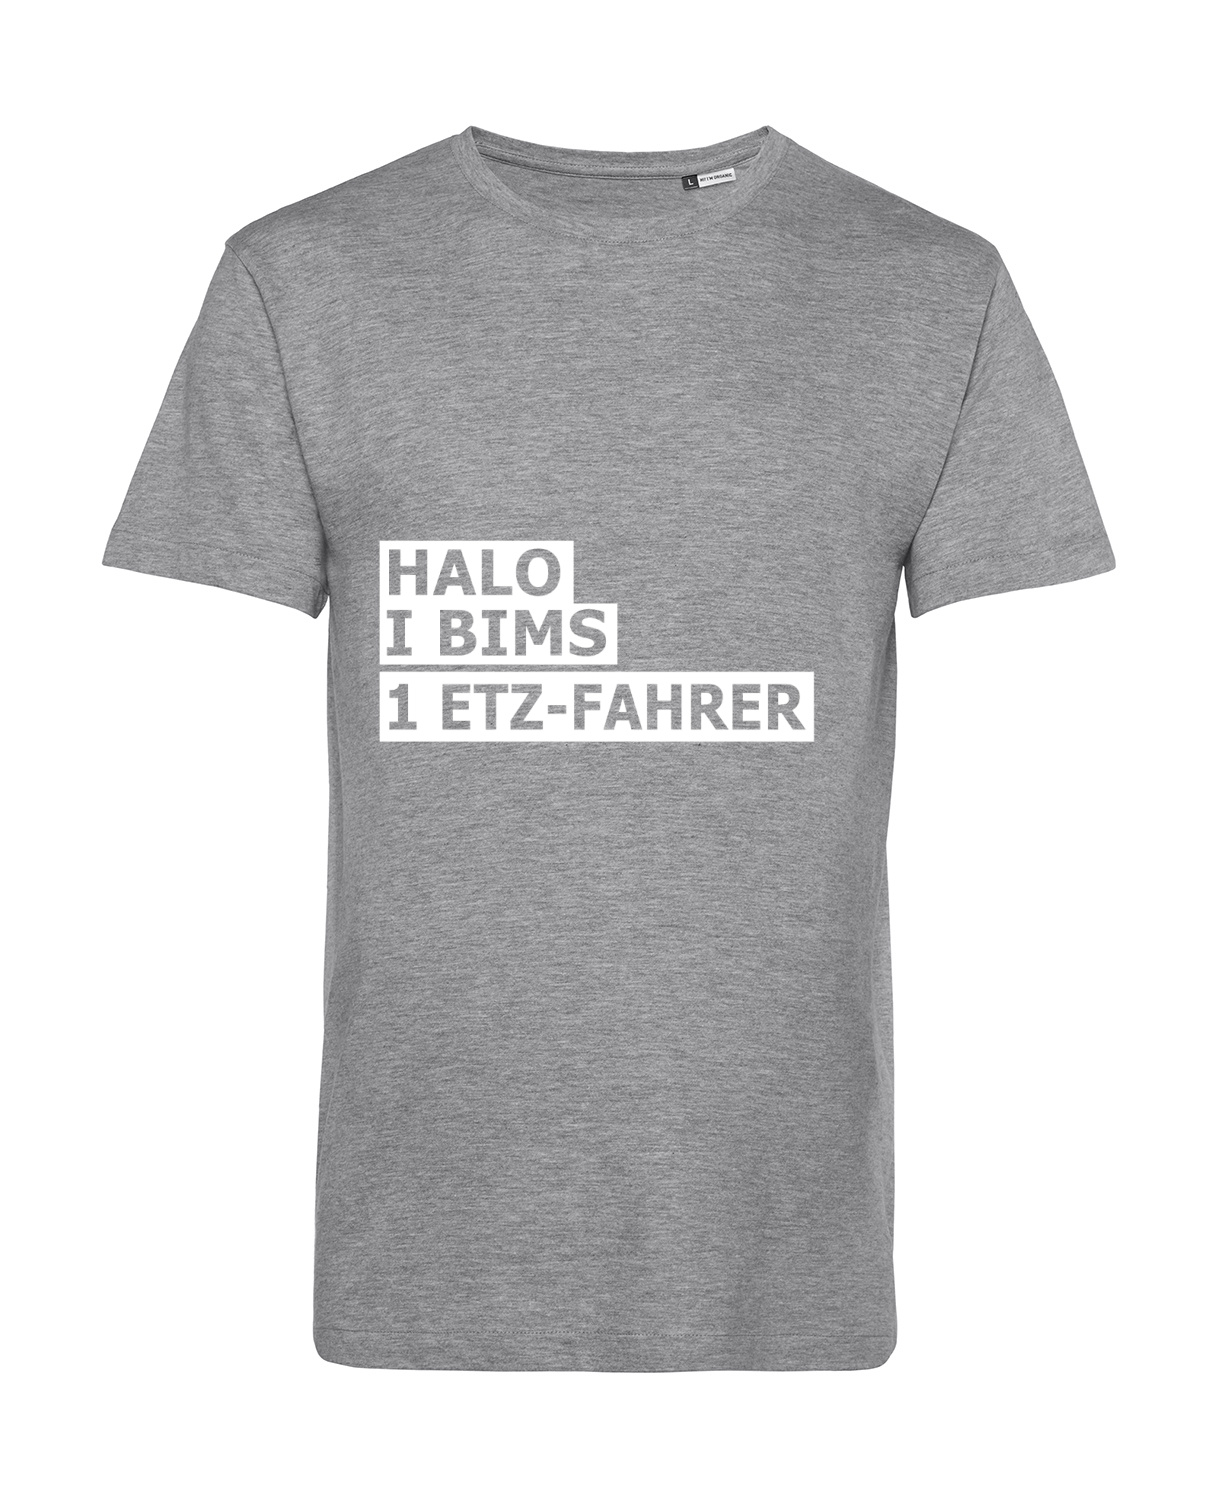 Nachhaltiges T-Shirt Herren 2Takter - Halo I bims 1 ETZ-Fahrer